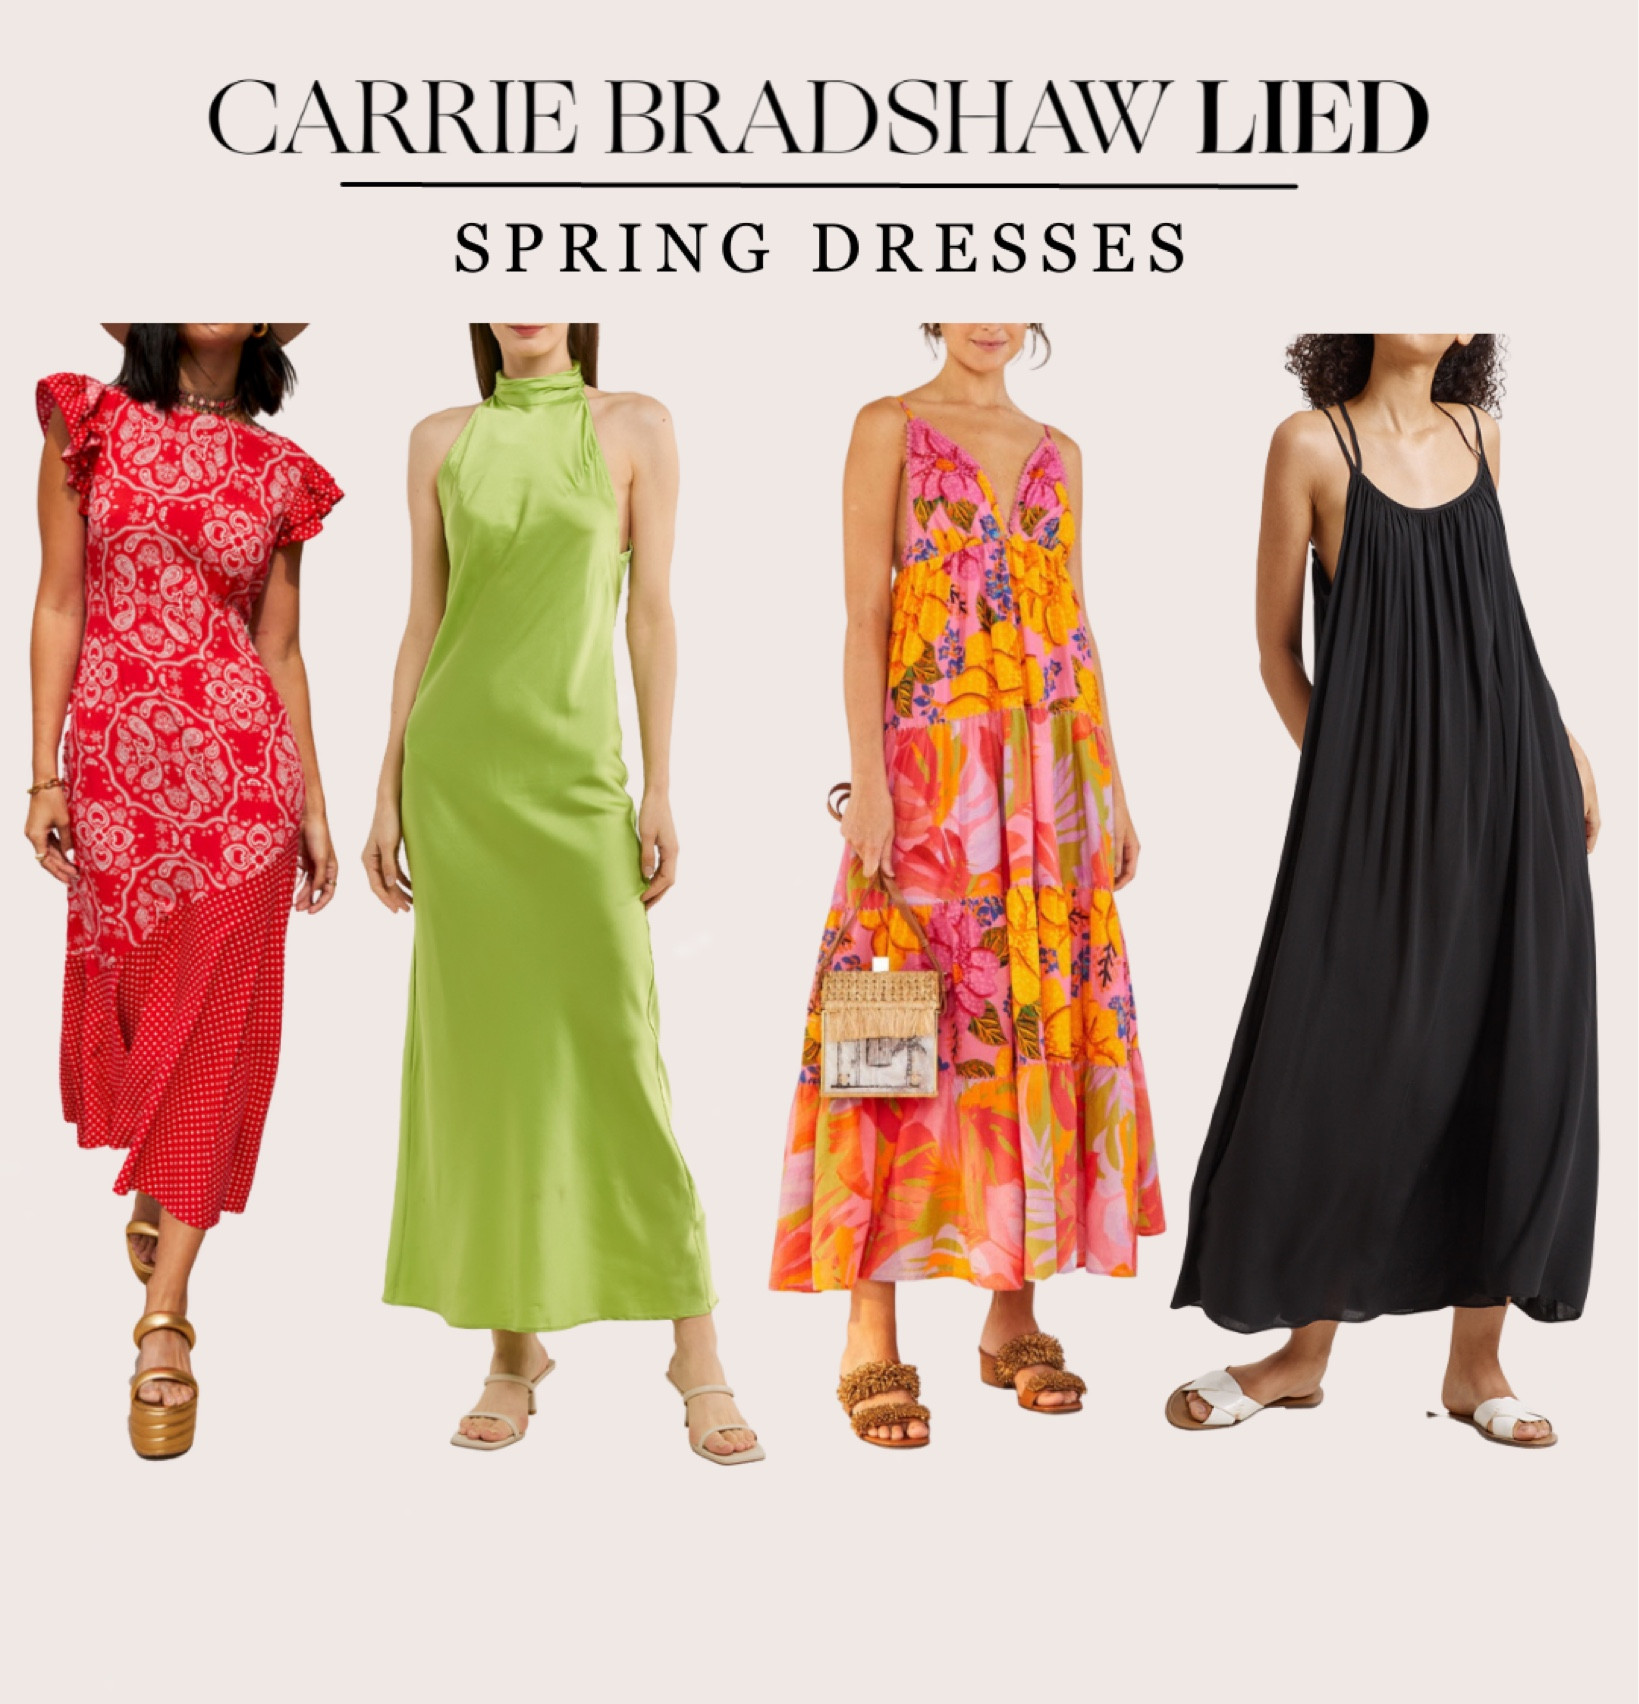 cashmere loungewear - Carrie Bradshaw Lied